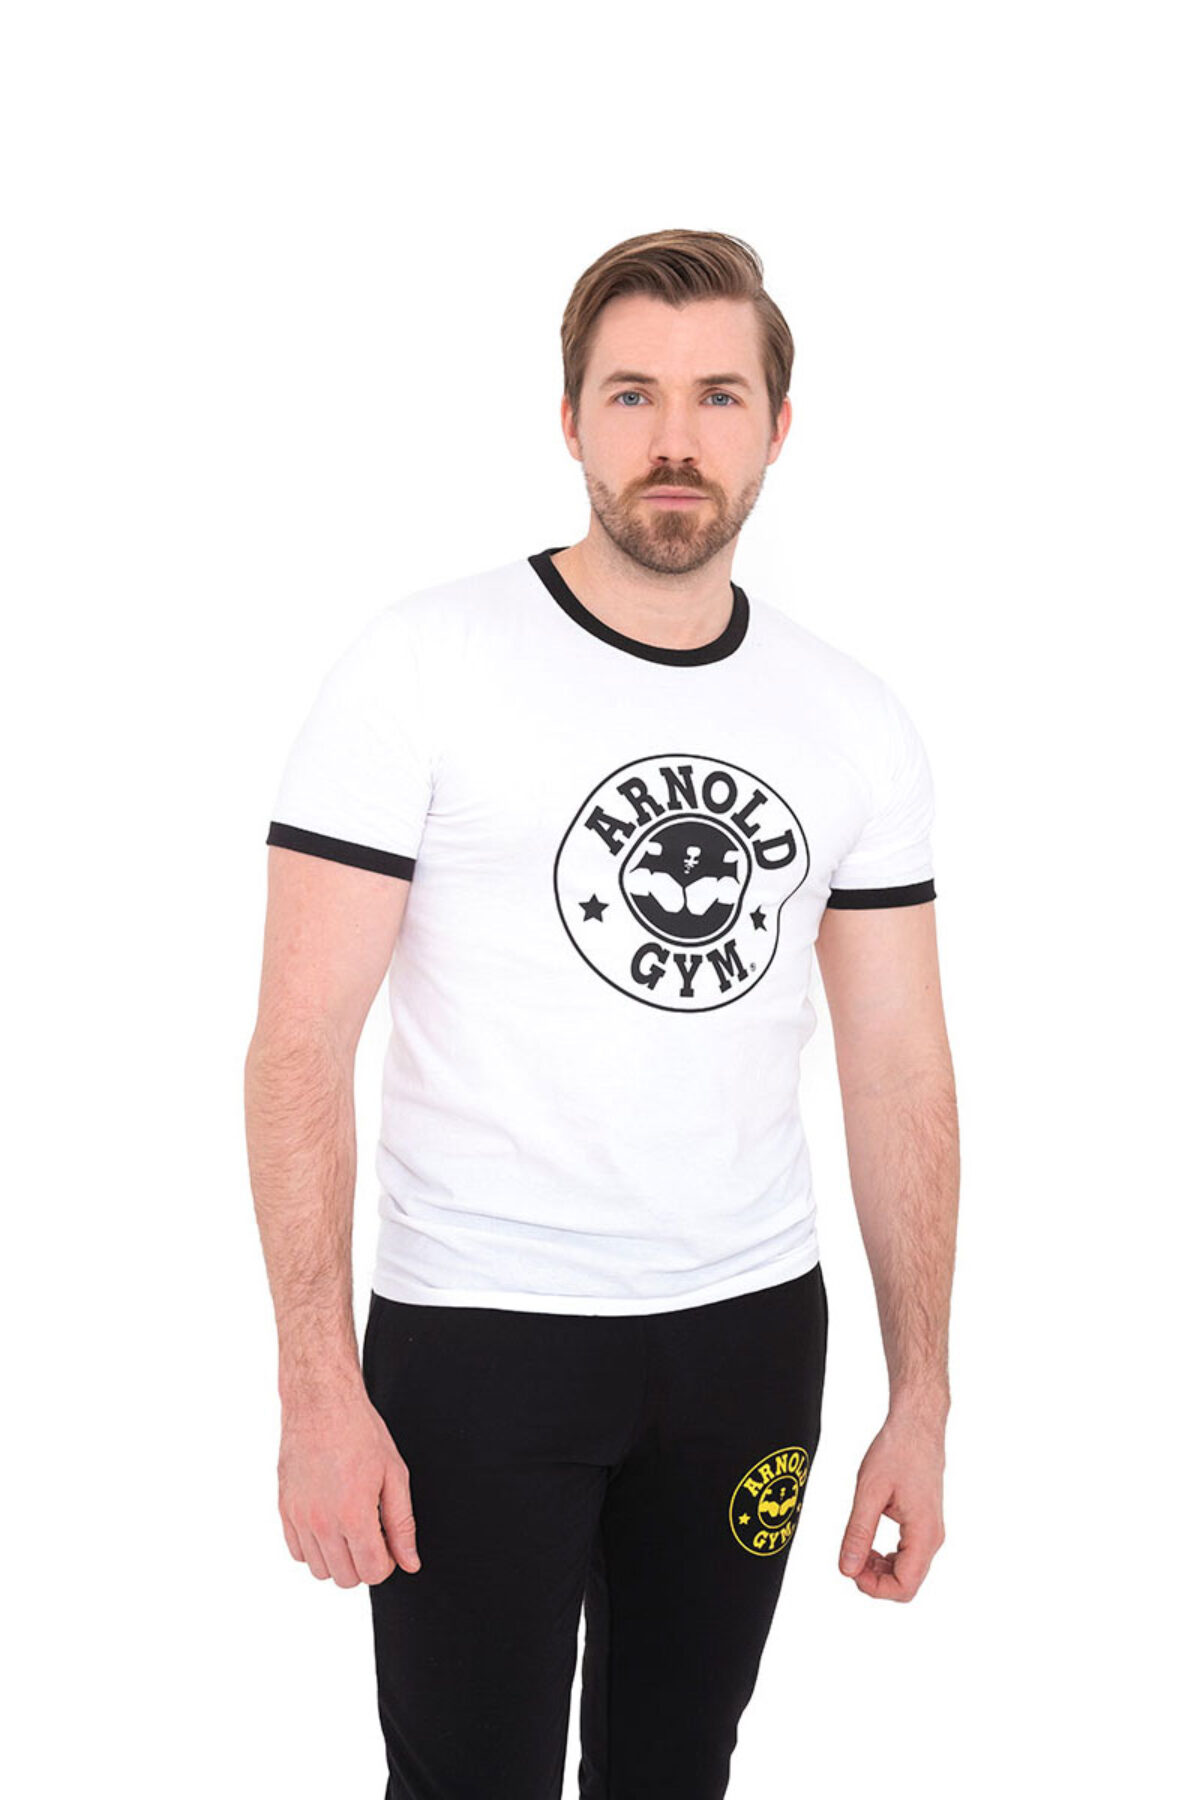 Retro Bodybuilding Workout Gym T-Shirts - White